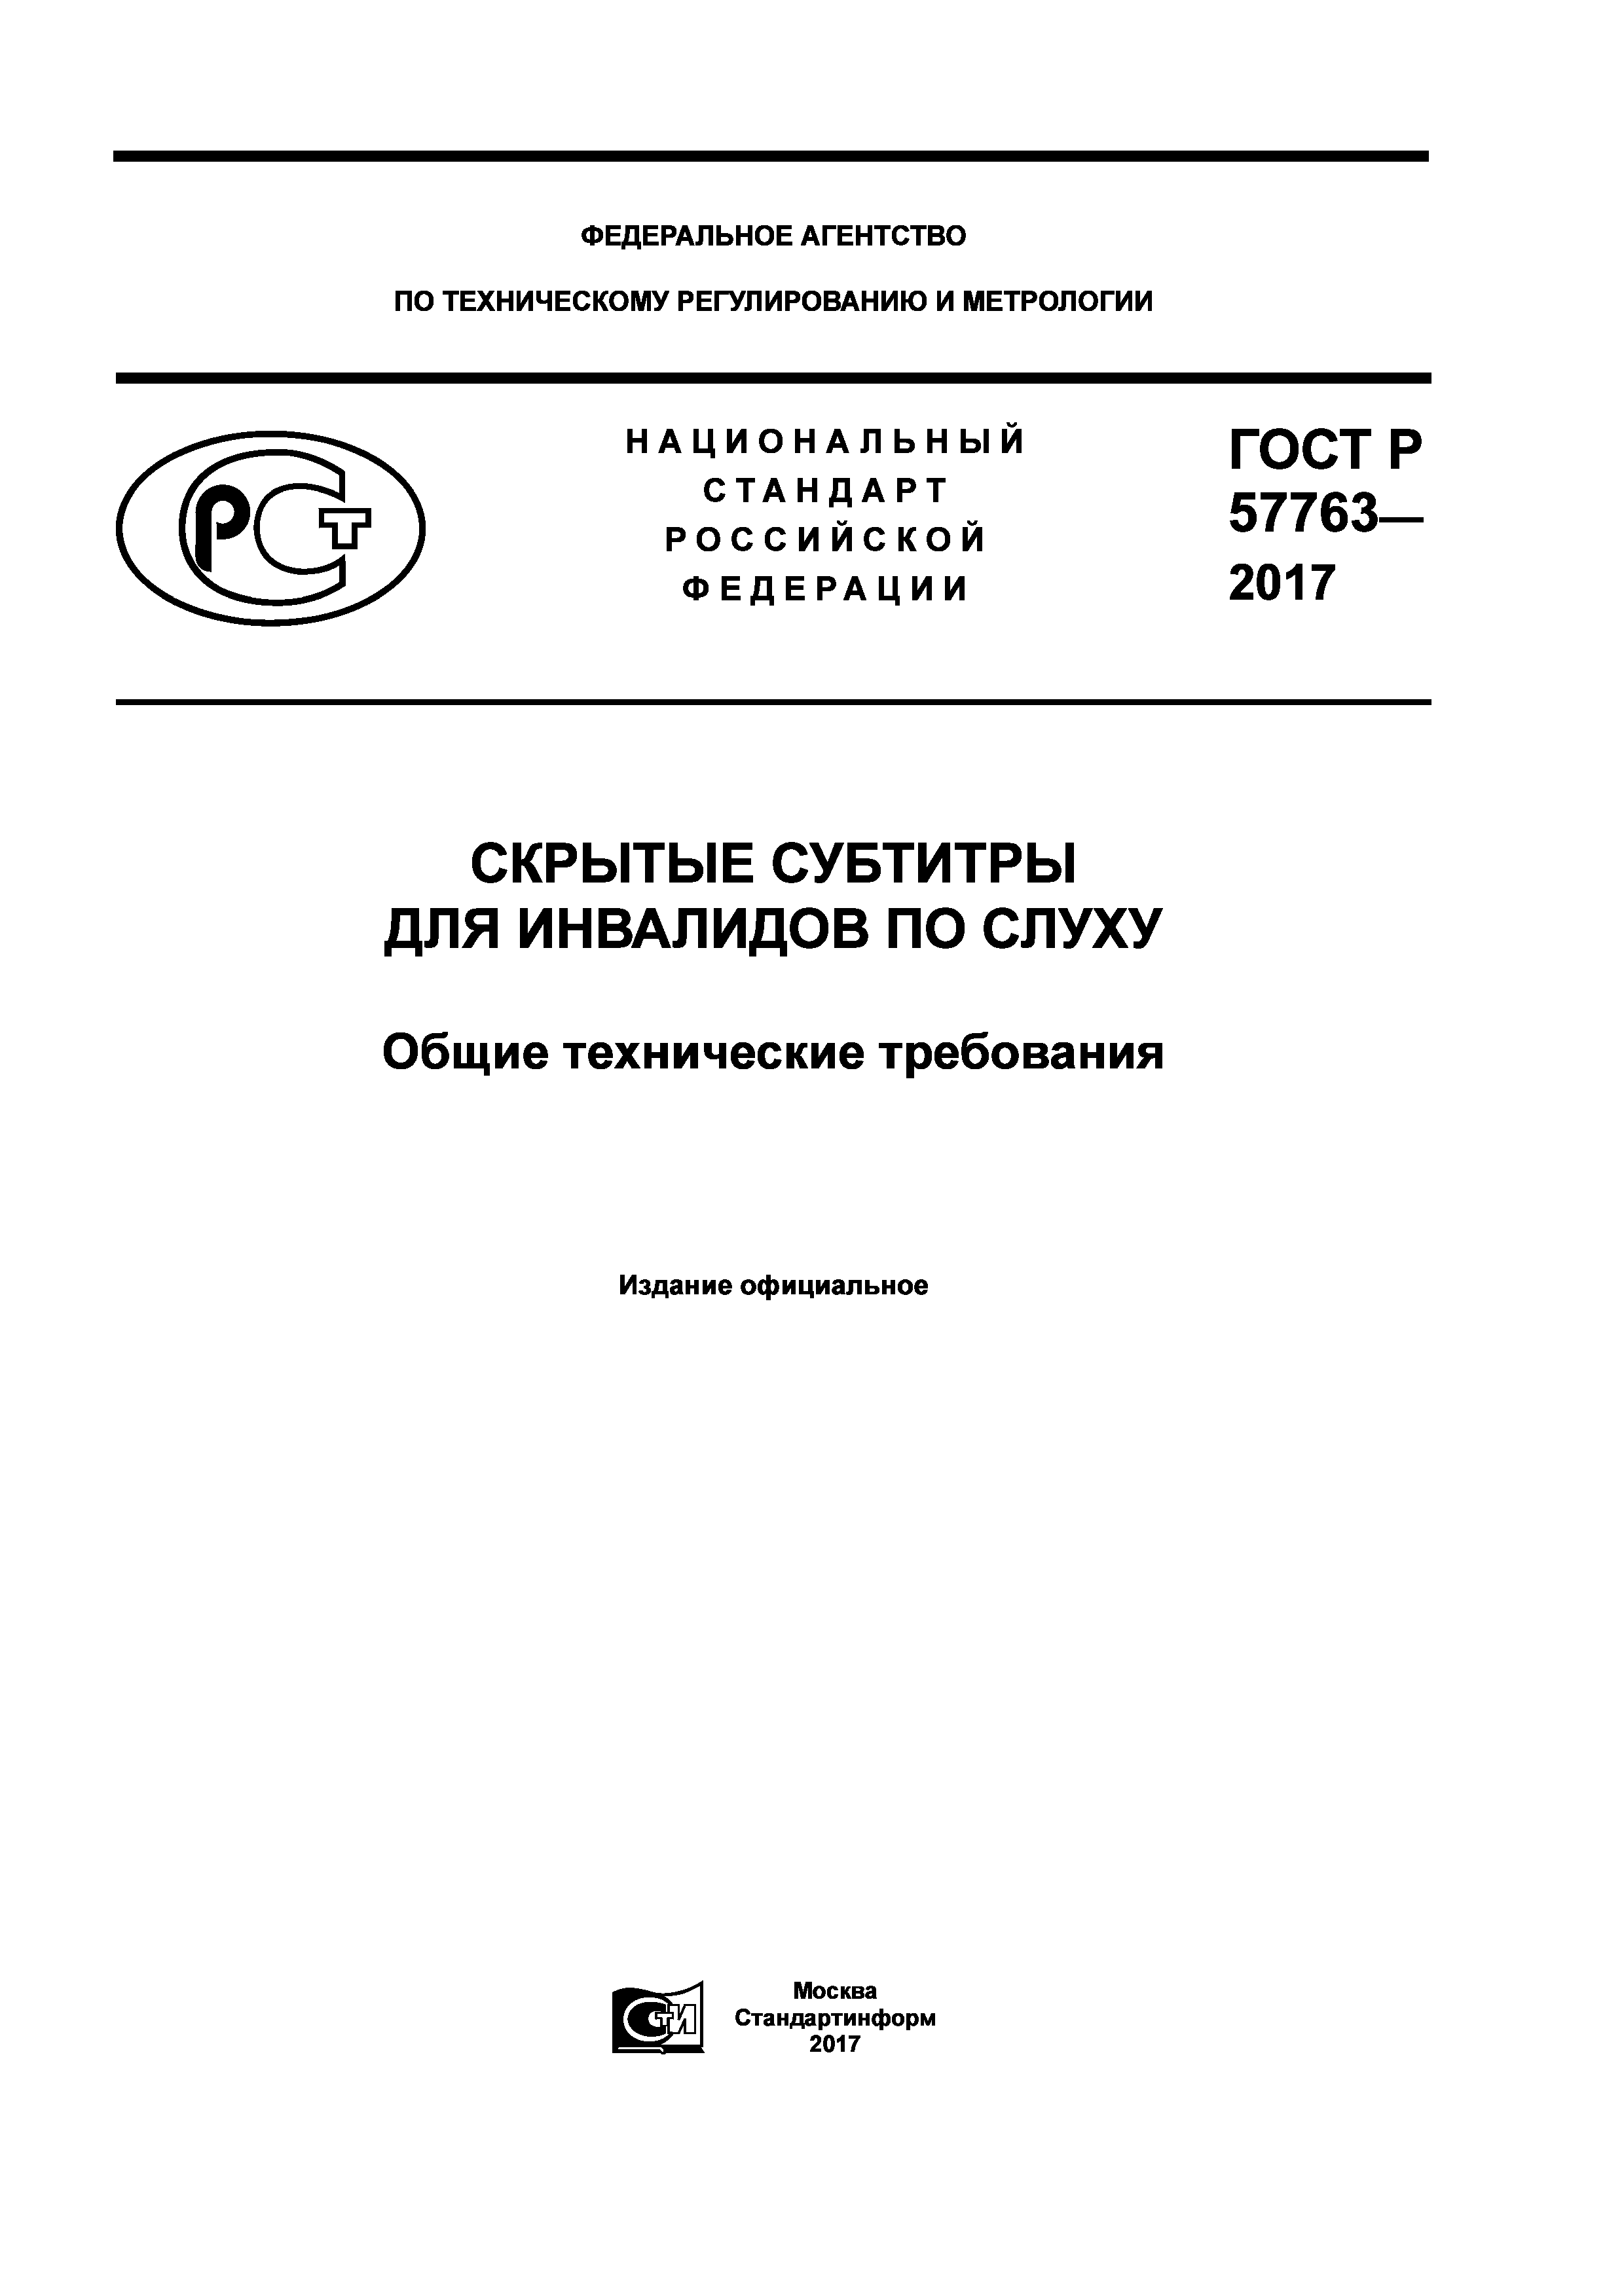 ГОСТ Р 57763-2017